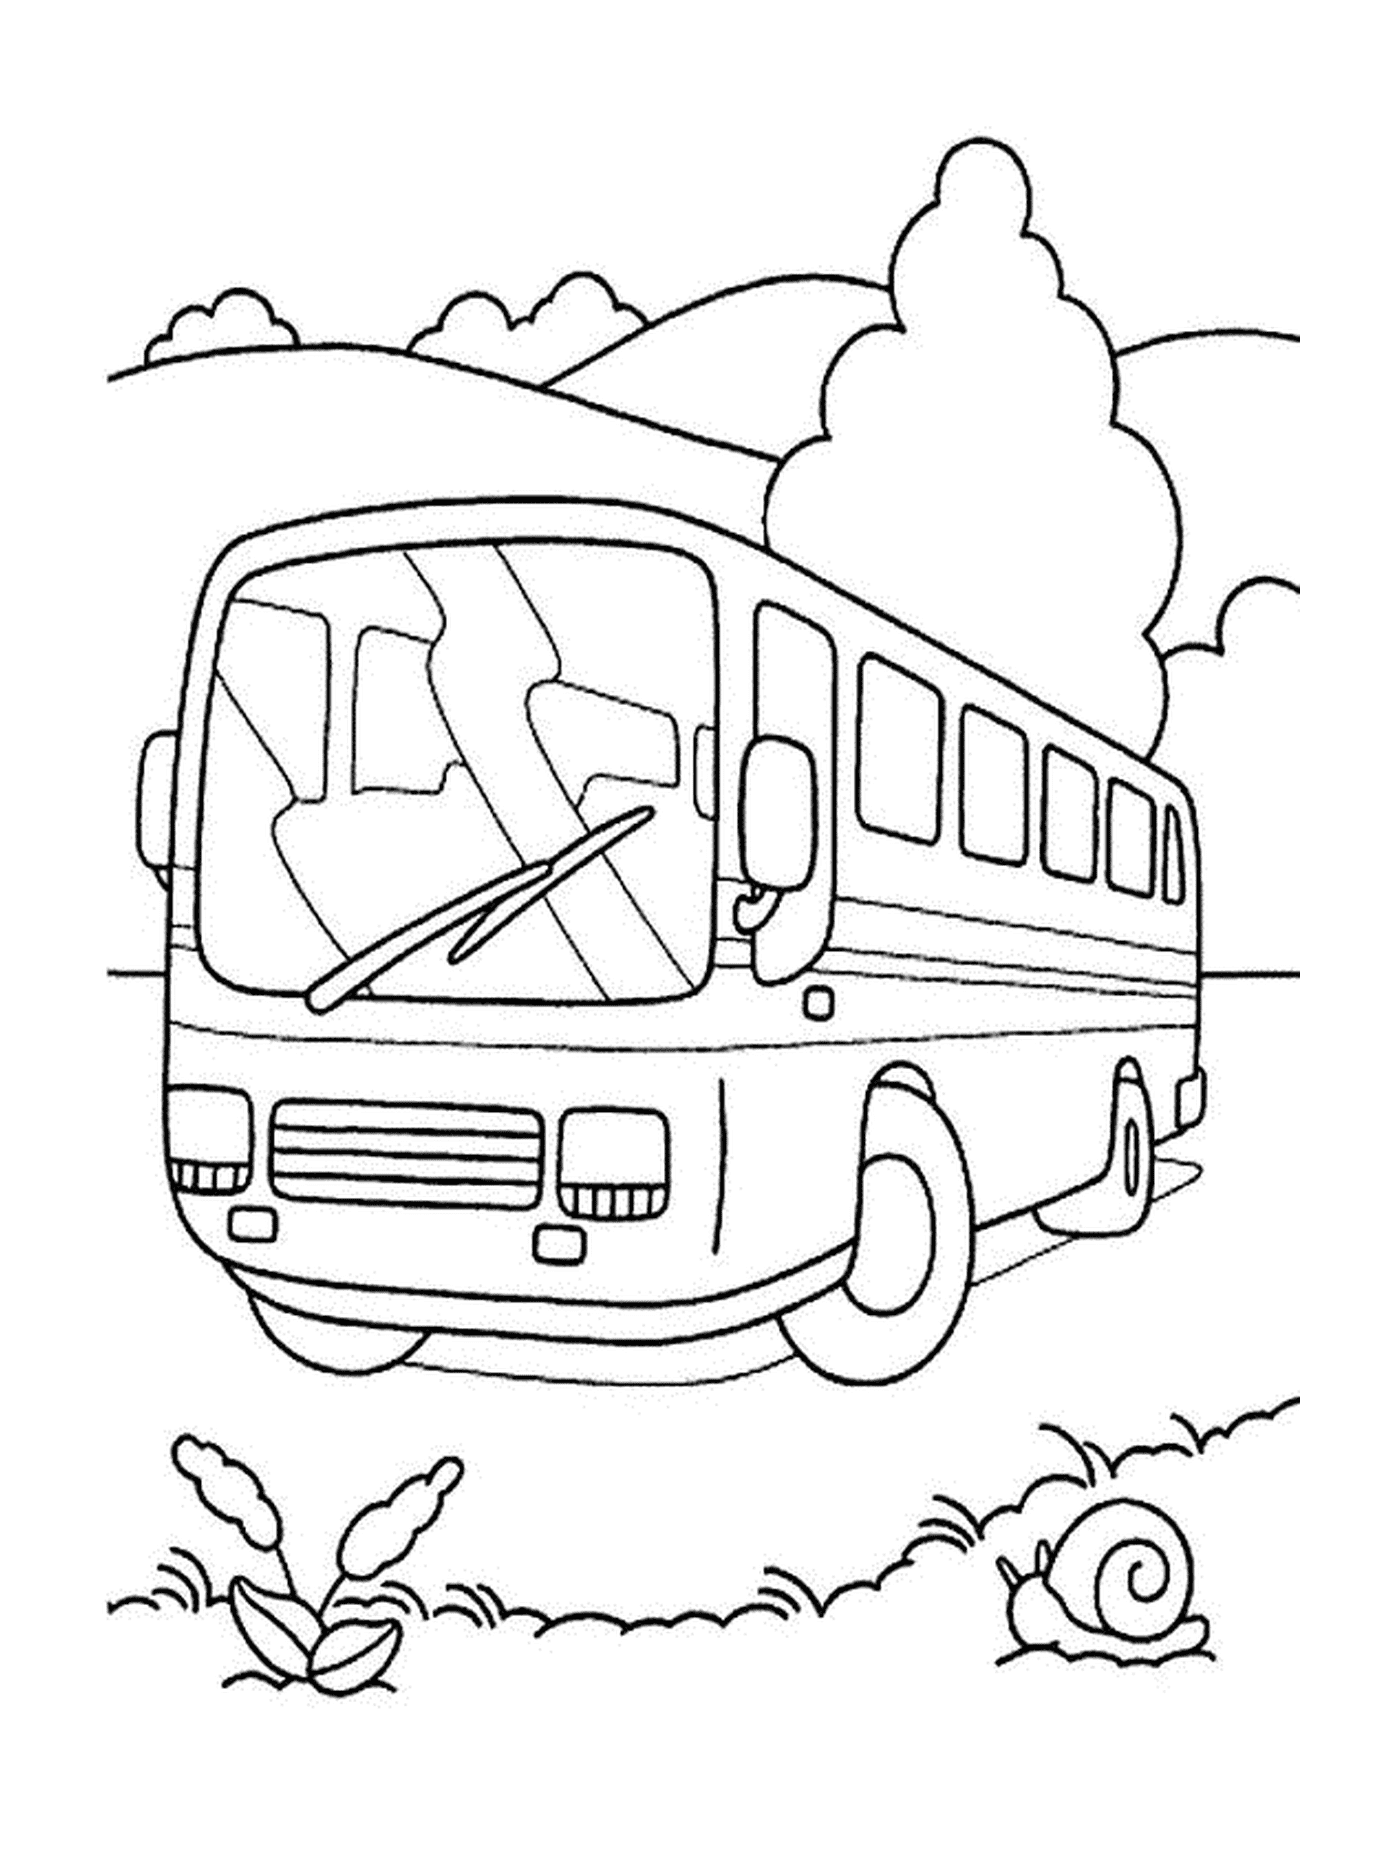  Autobus 